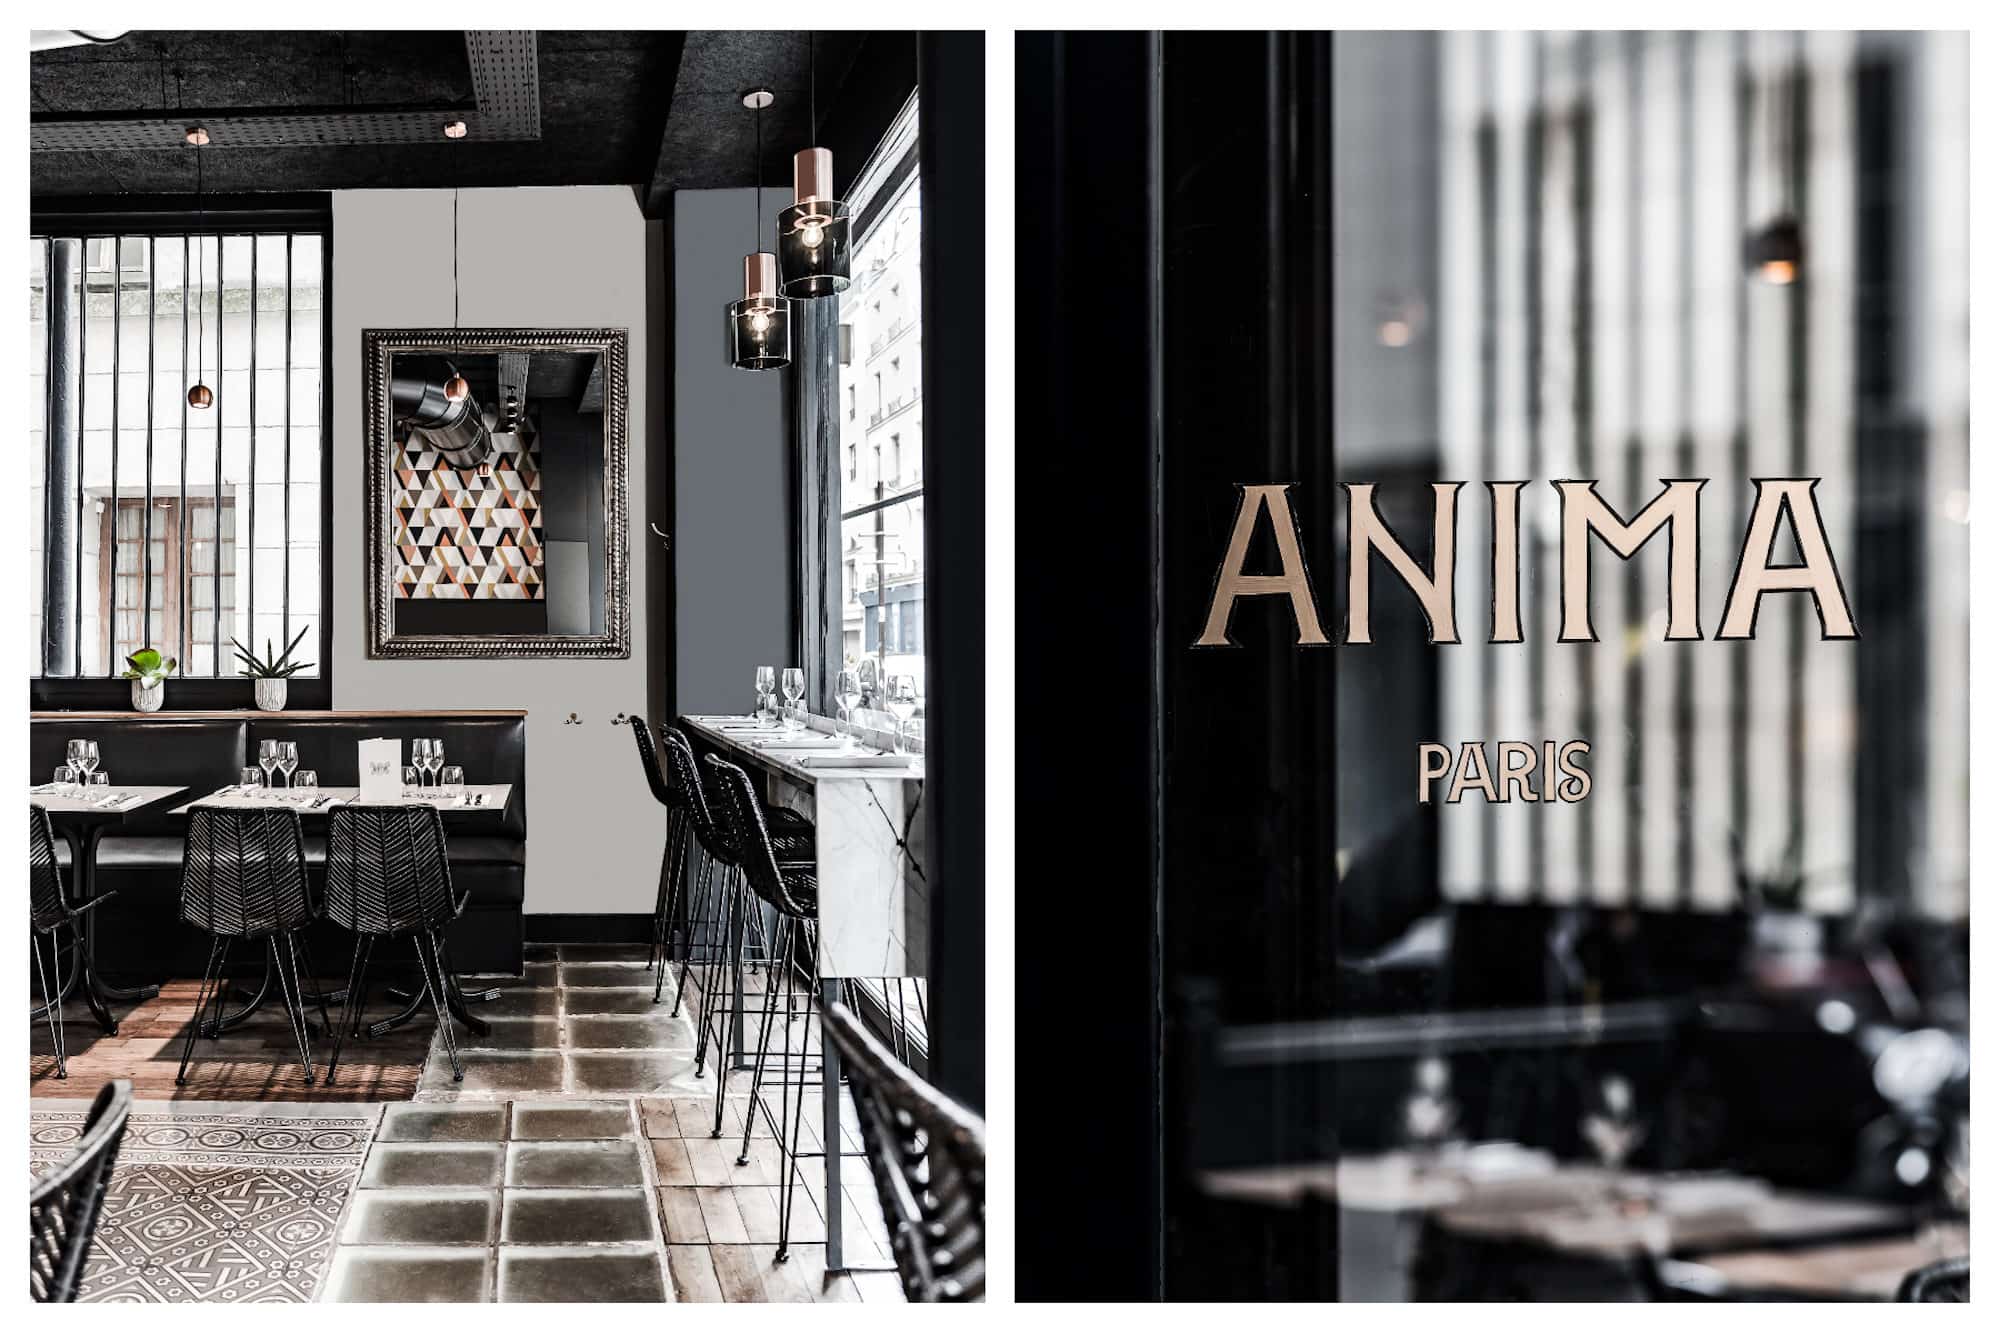 The subdued slate gray decor of Anima restaurant on rue du Cherche-Midi (left). The window of Anima restaurant in Paris (right).